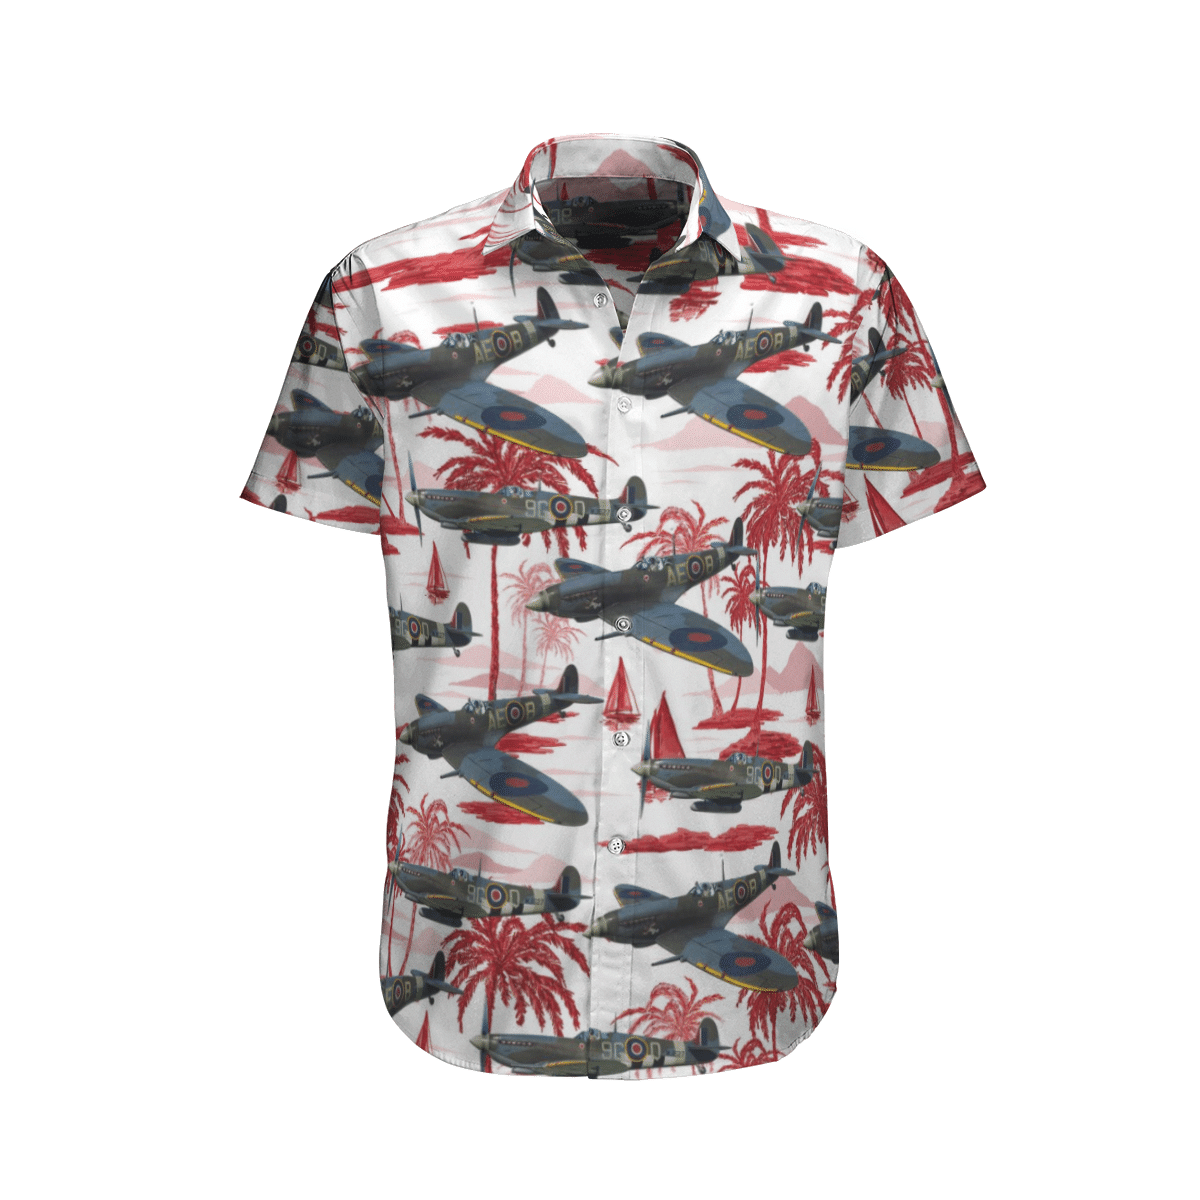 Get a new Hawaiian shirt to enjoy summer vacation 90